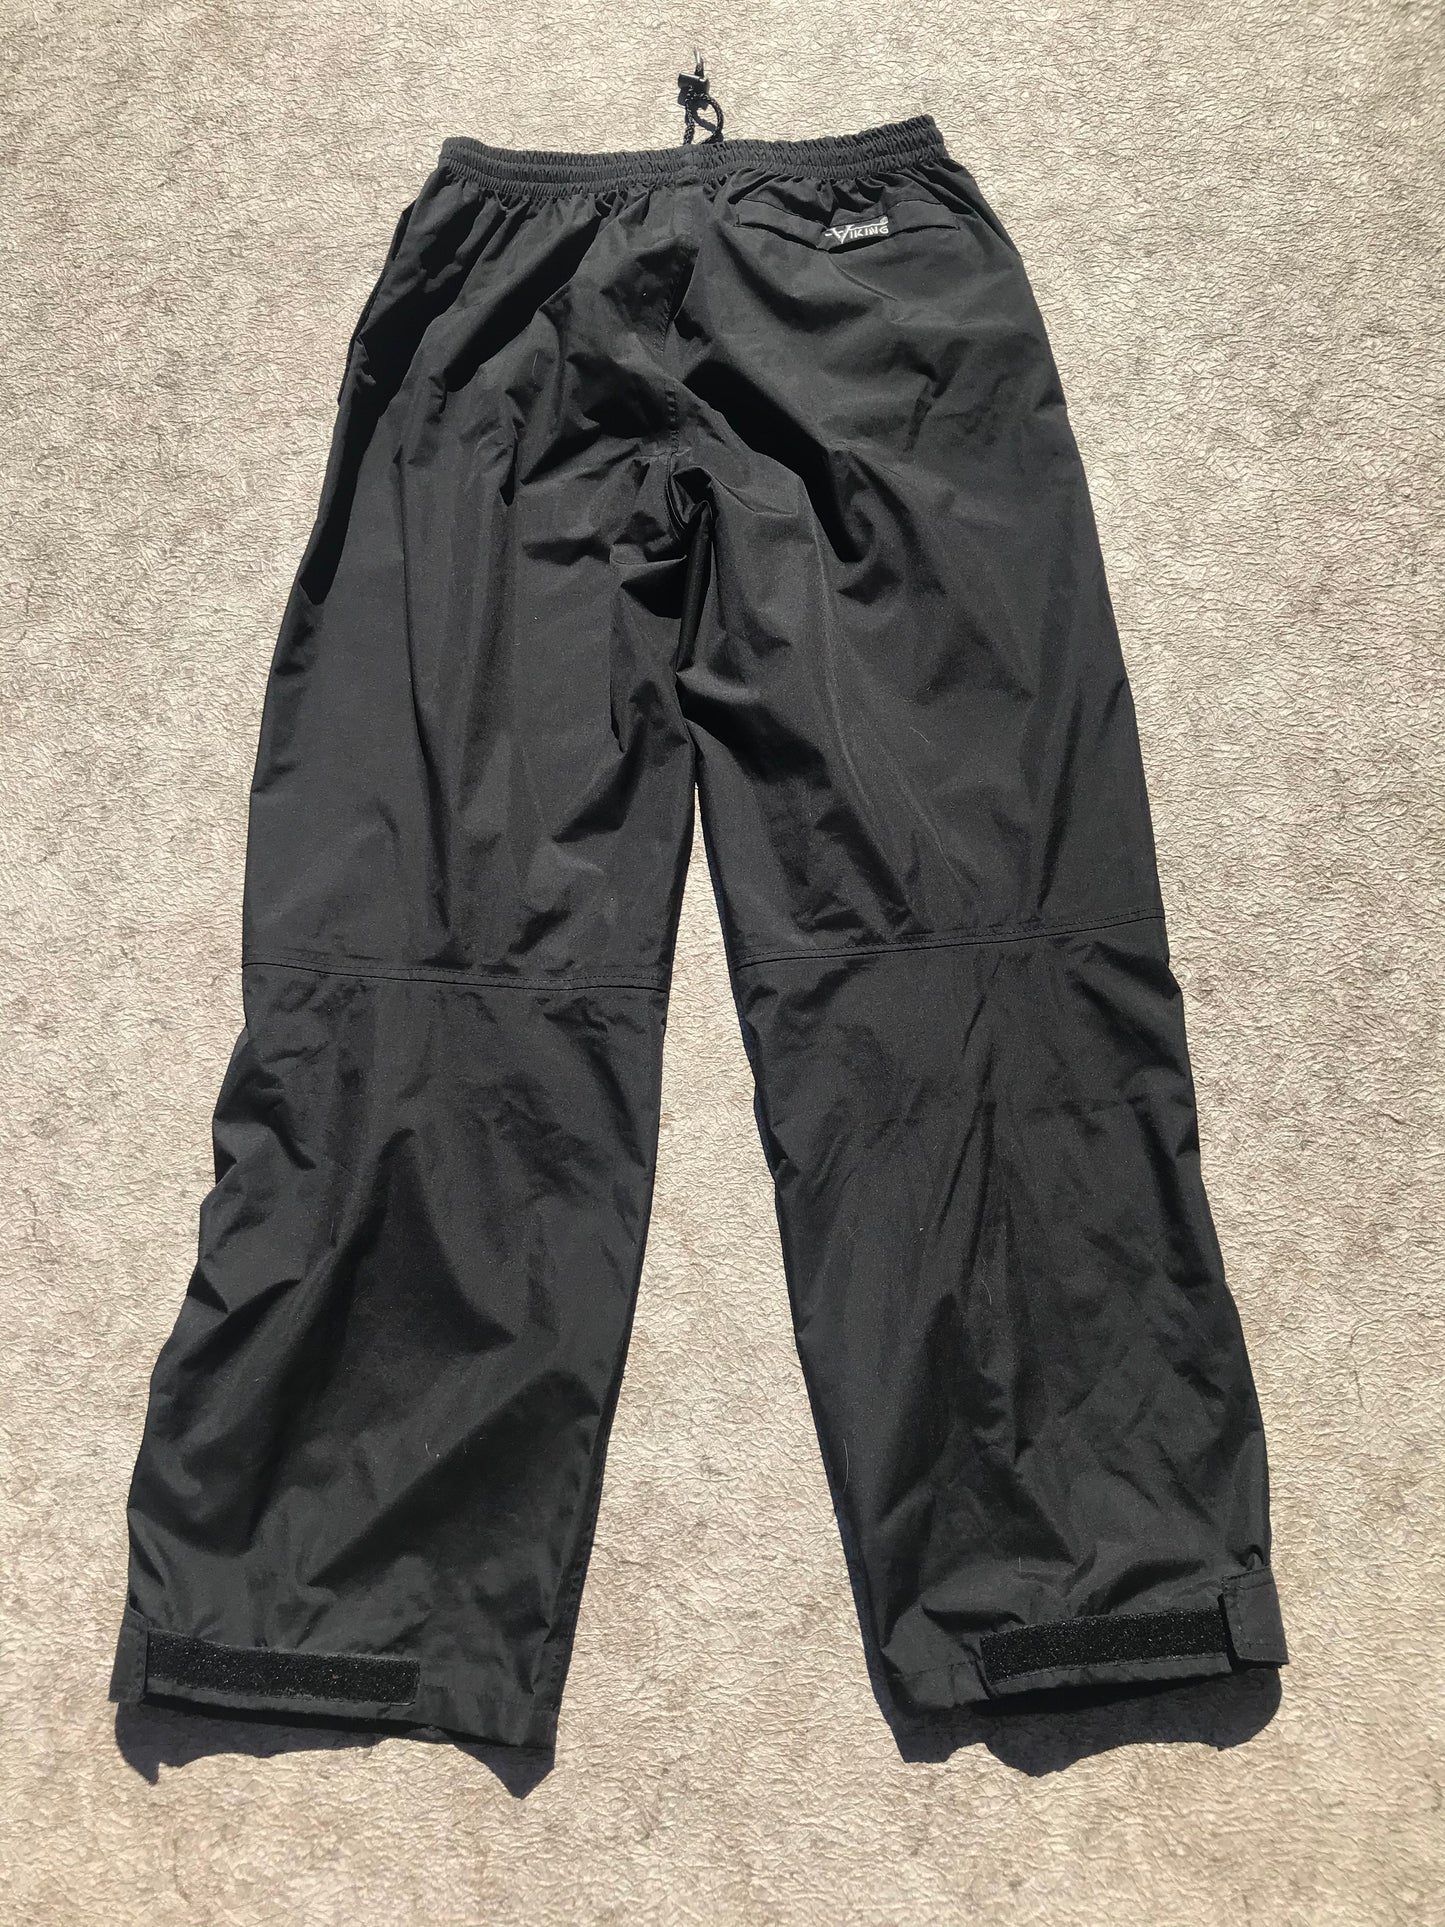 Rain Pants Men's Size XX Large Viking Commercial Grade Waterproof Black 32 inch Leg New Demo Model